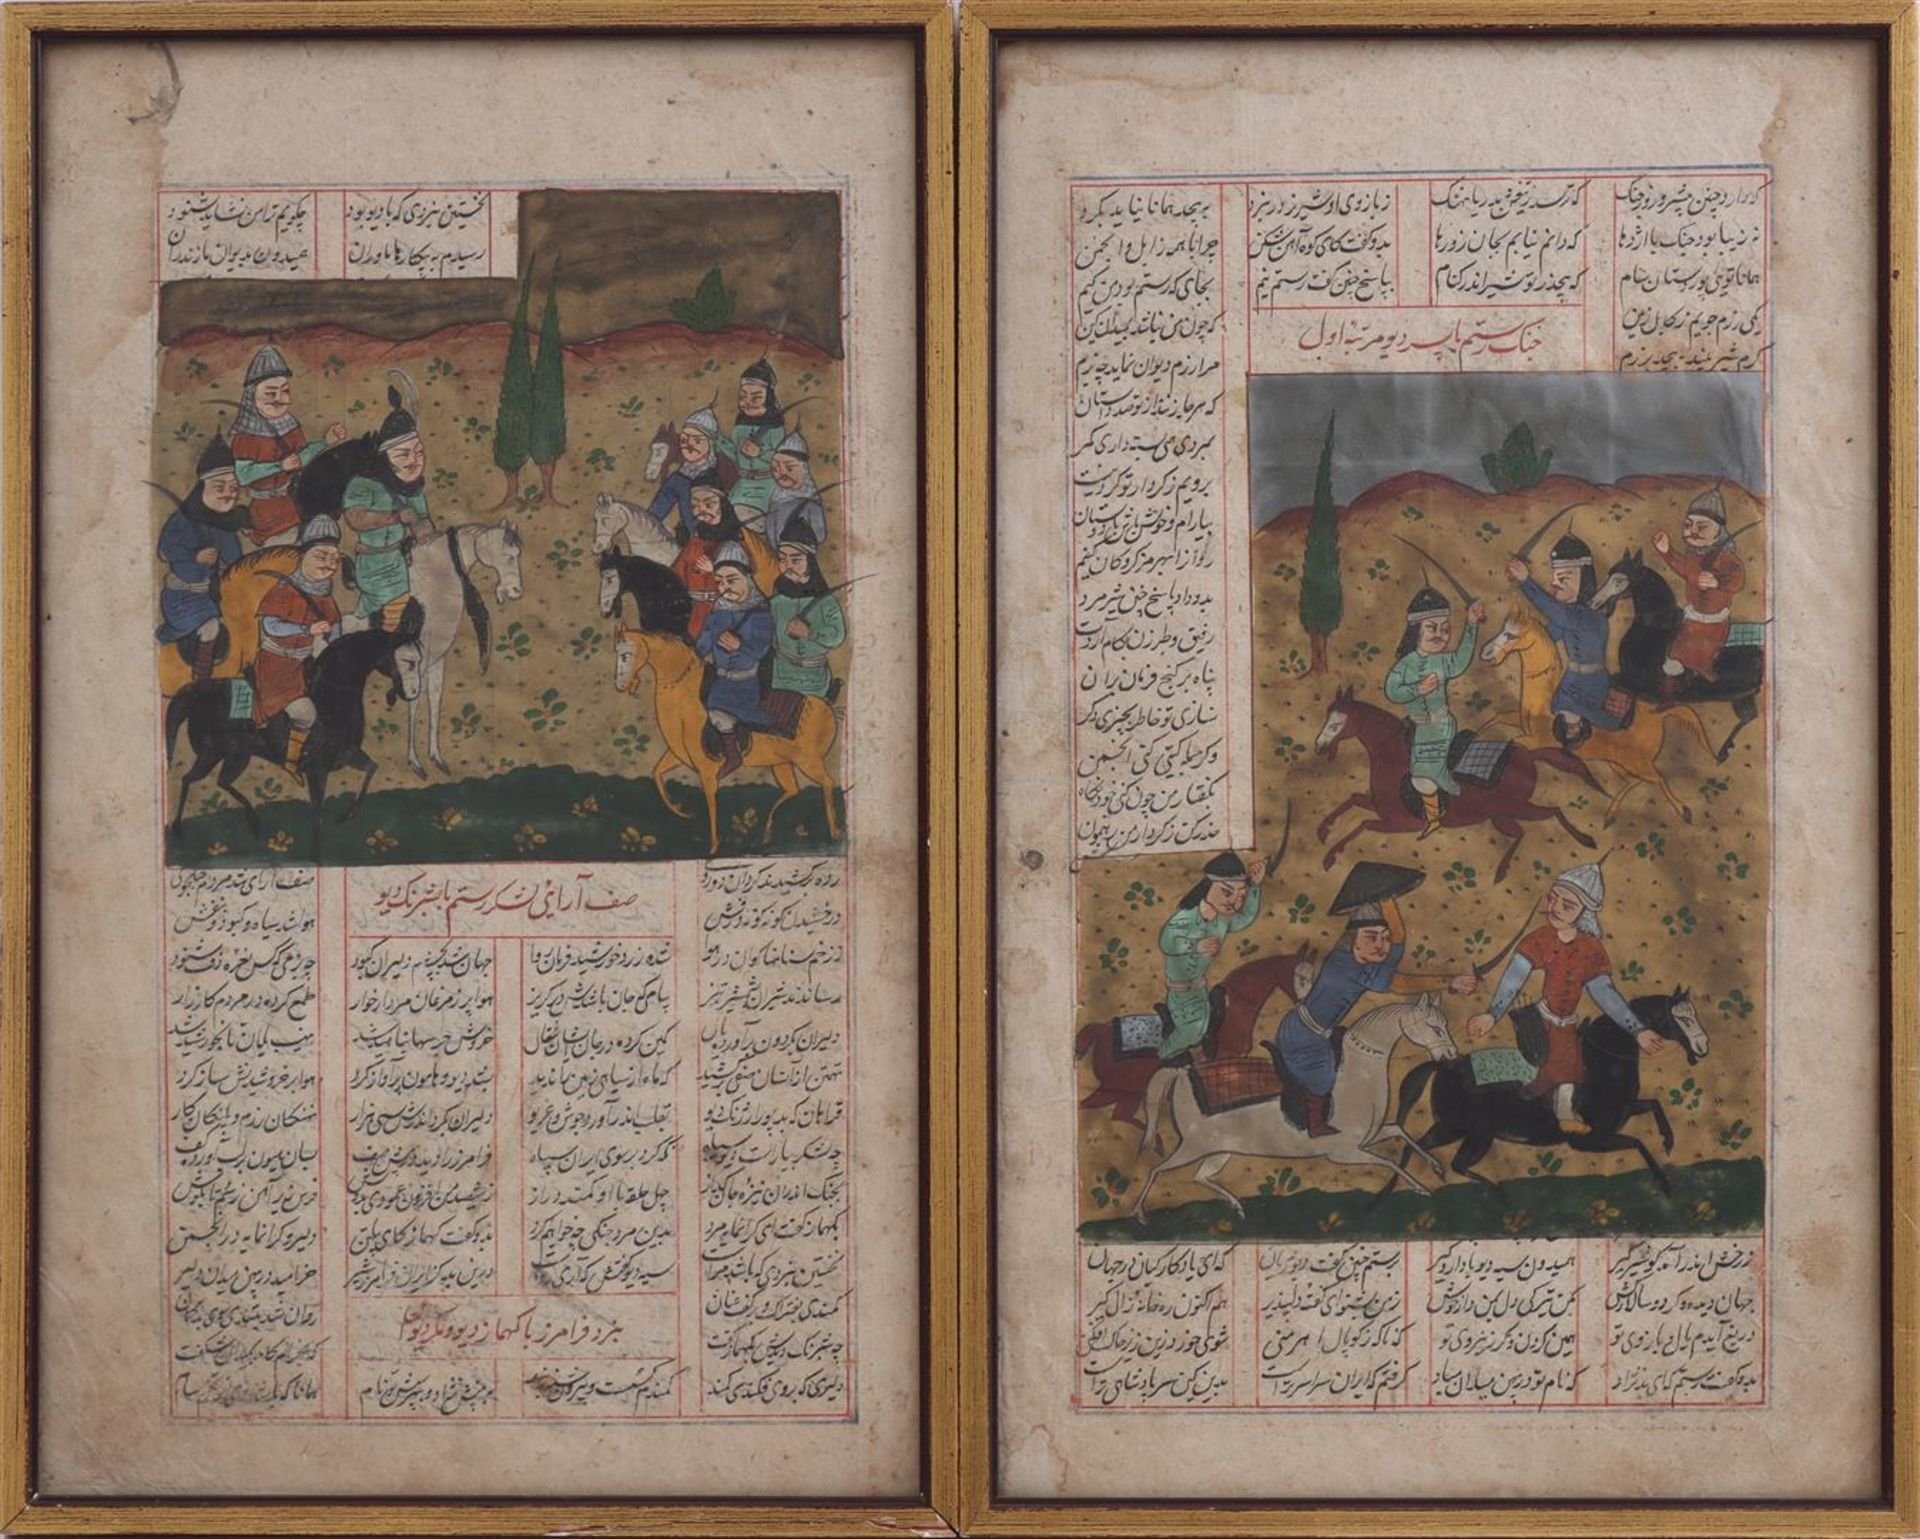 2 framed Arabic representations